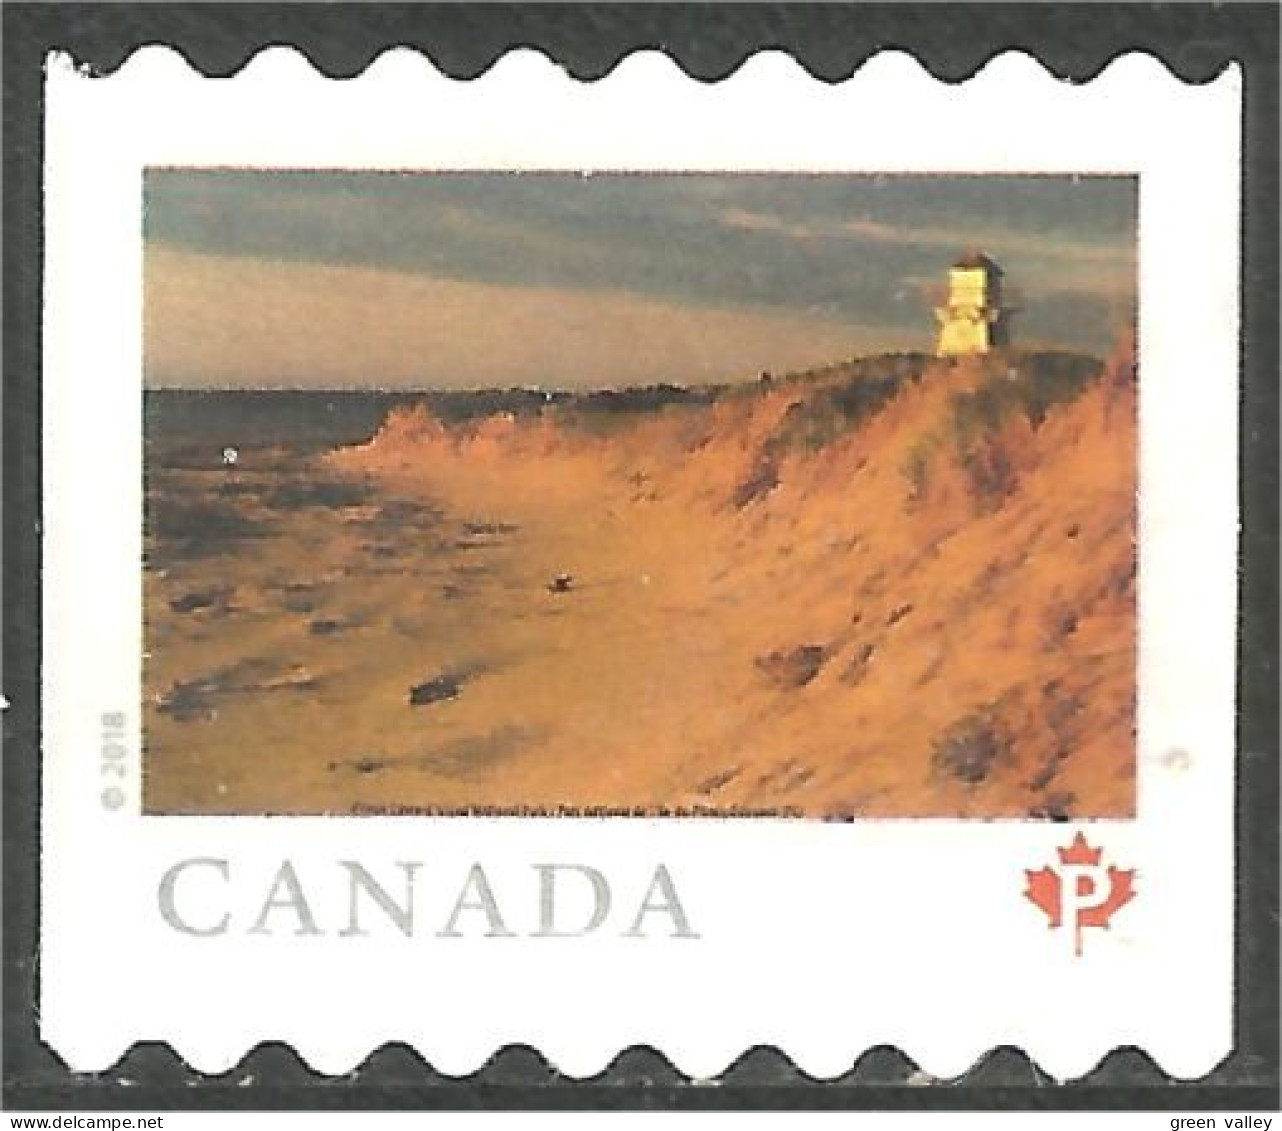 Canada Ile Prince Edward Island Phare Lighthouse Lichtturm Coil Roulette Mint No Gum (412) - Iles